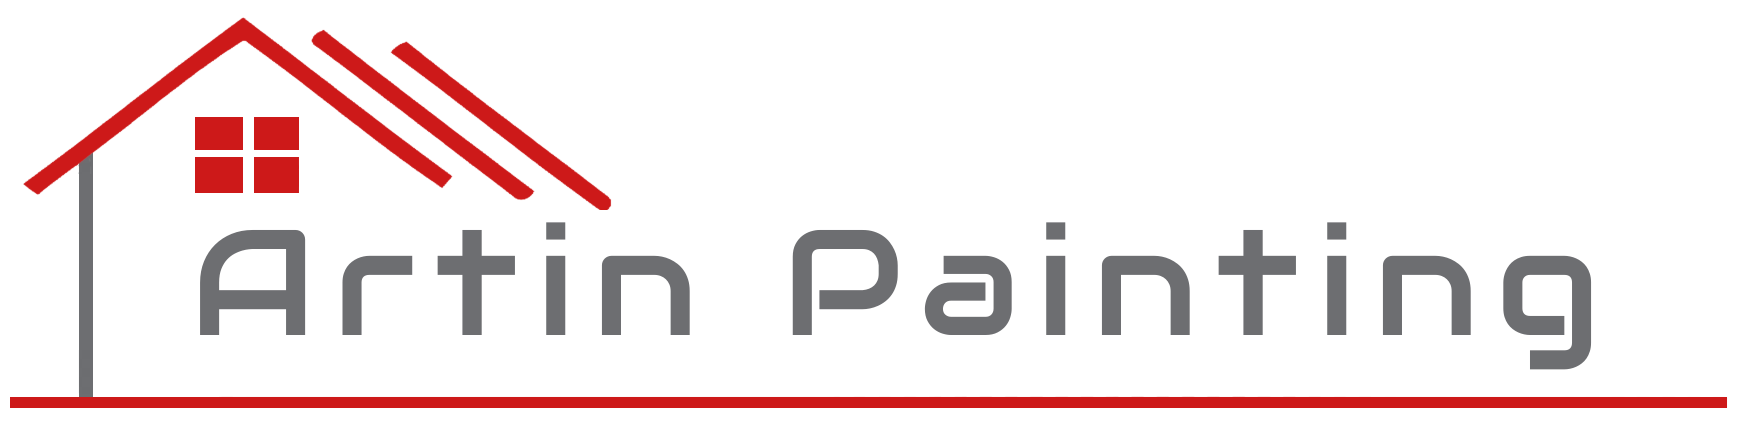 artin painting logo